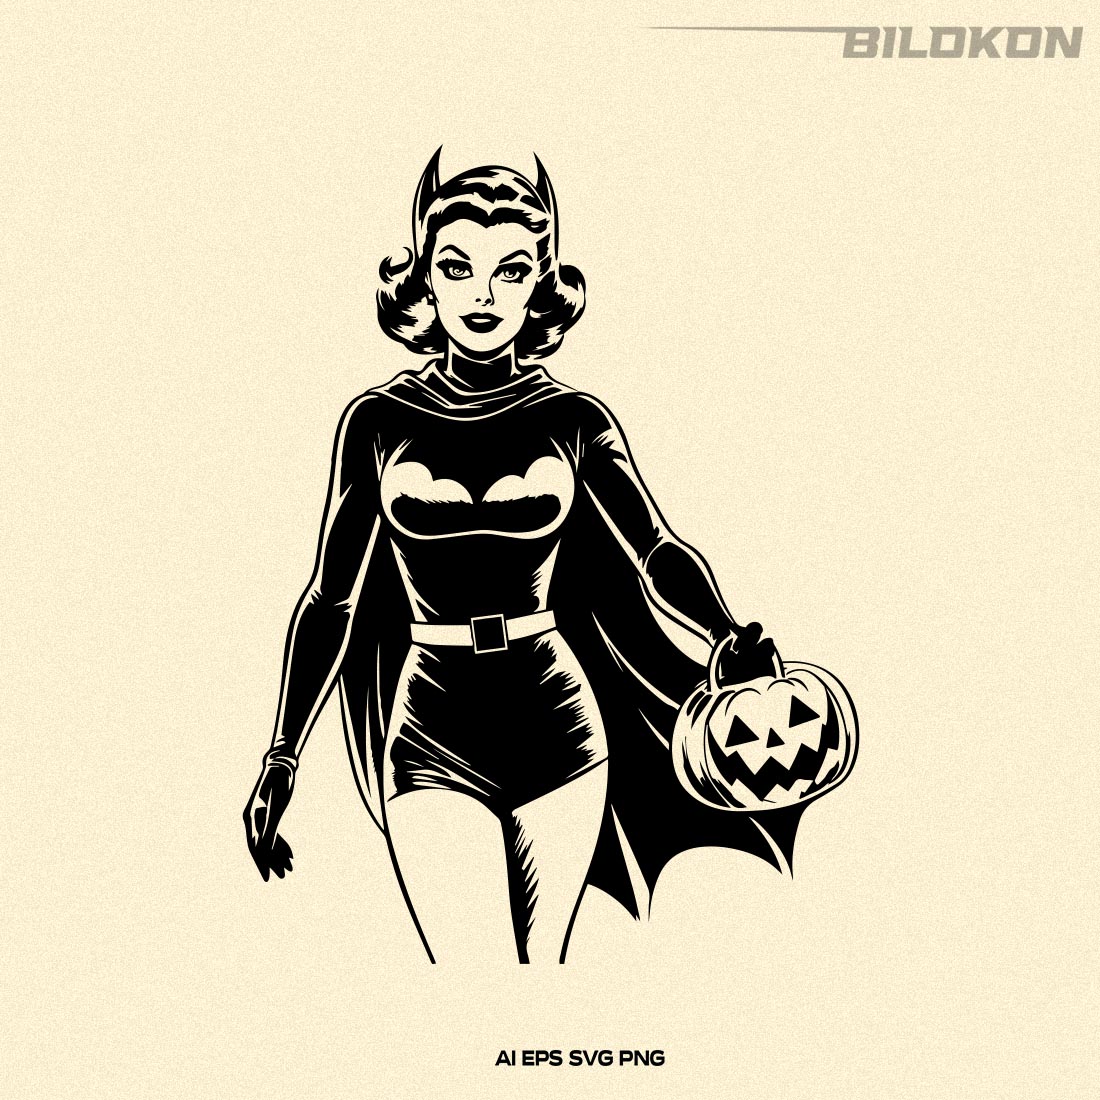 Woman hold pumpkin bag, Halloween costume, Halloween SVG preview image.